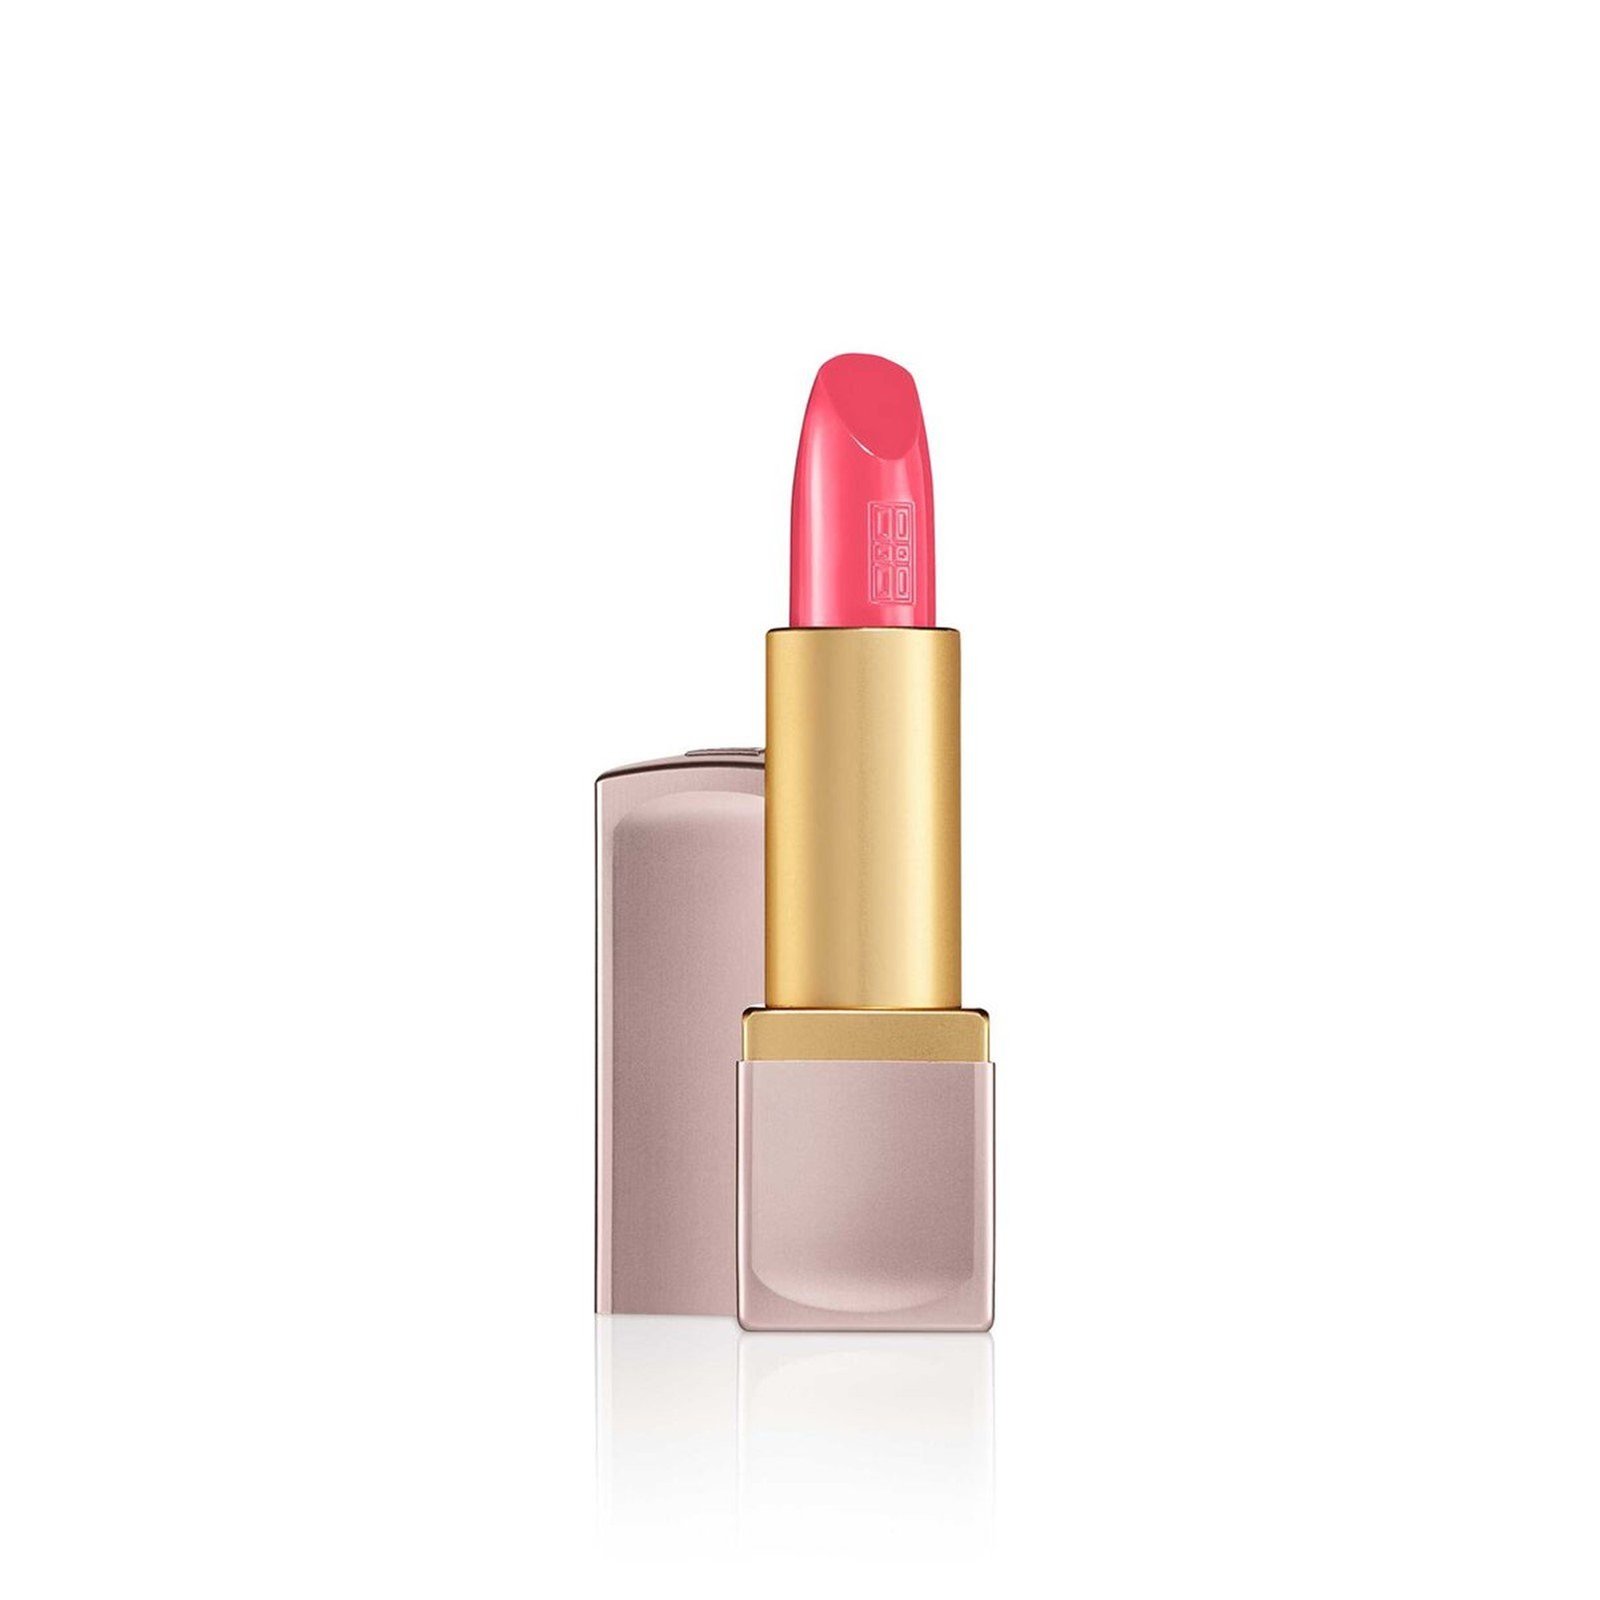 Elizabeth Arden Lip Color Lipstick 02 Truly Pink 4g (0.14 oz)